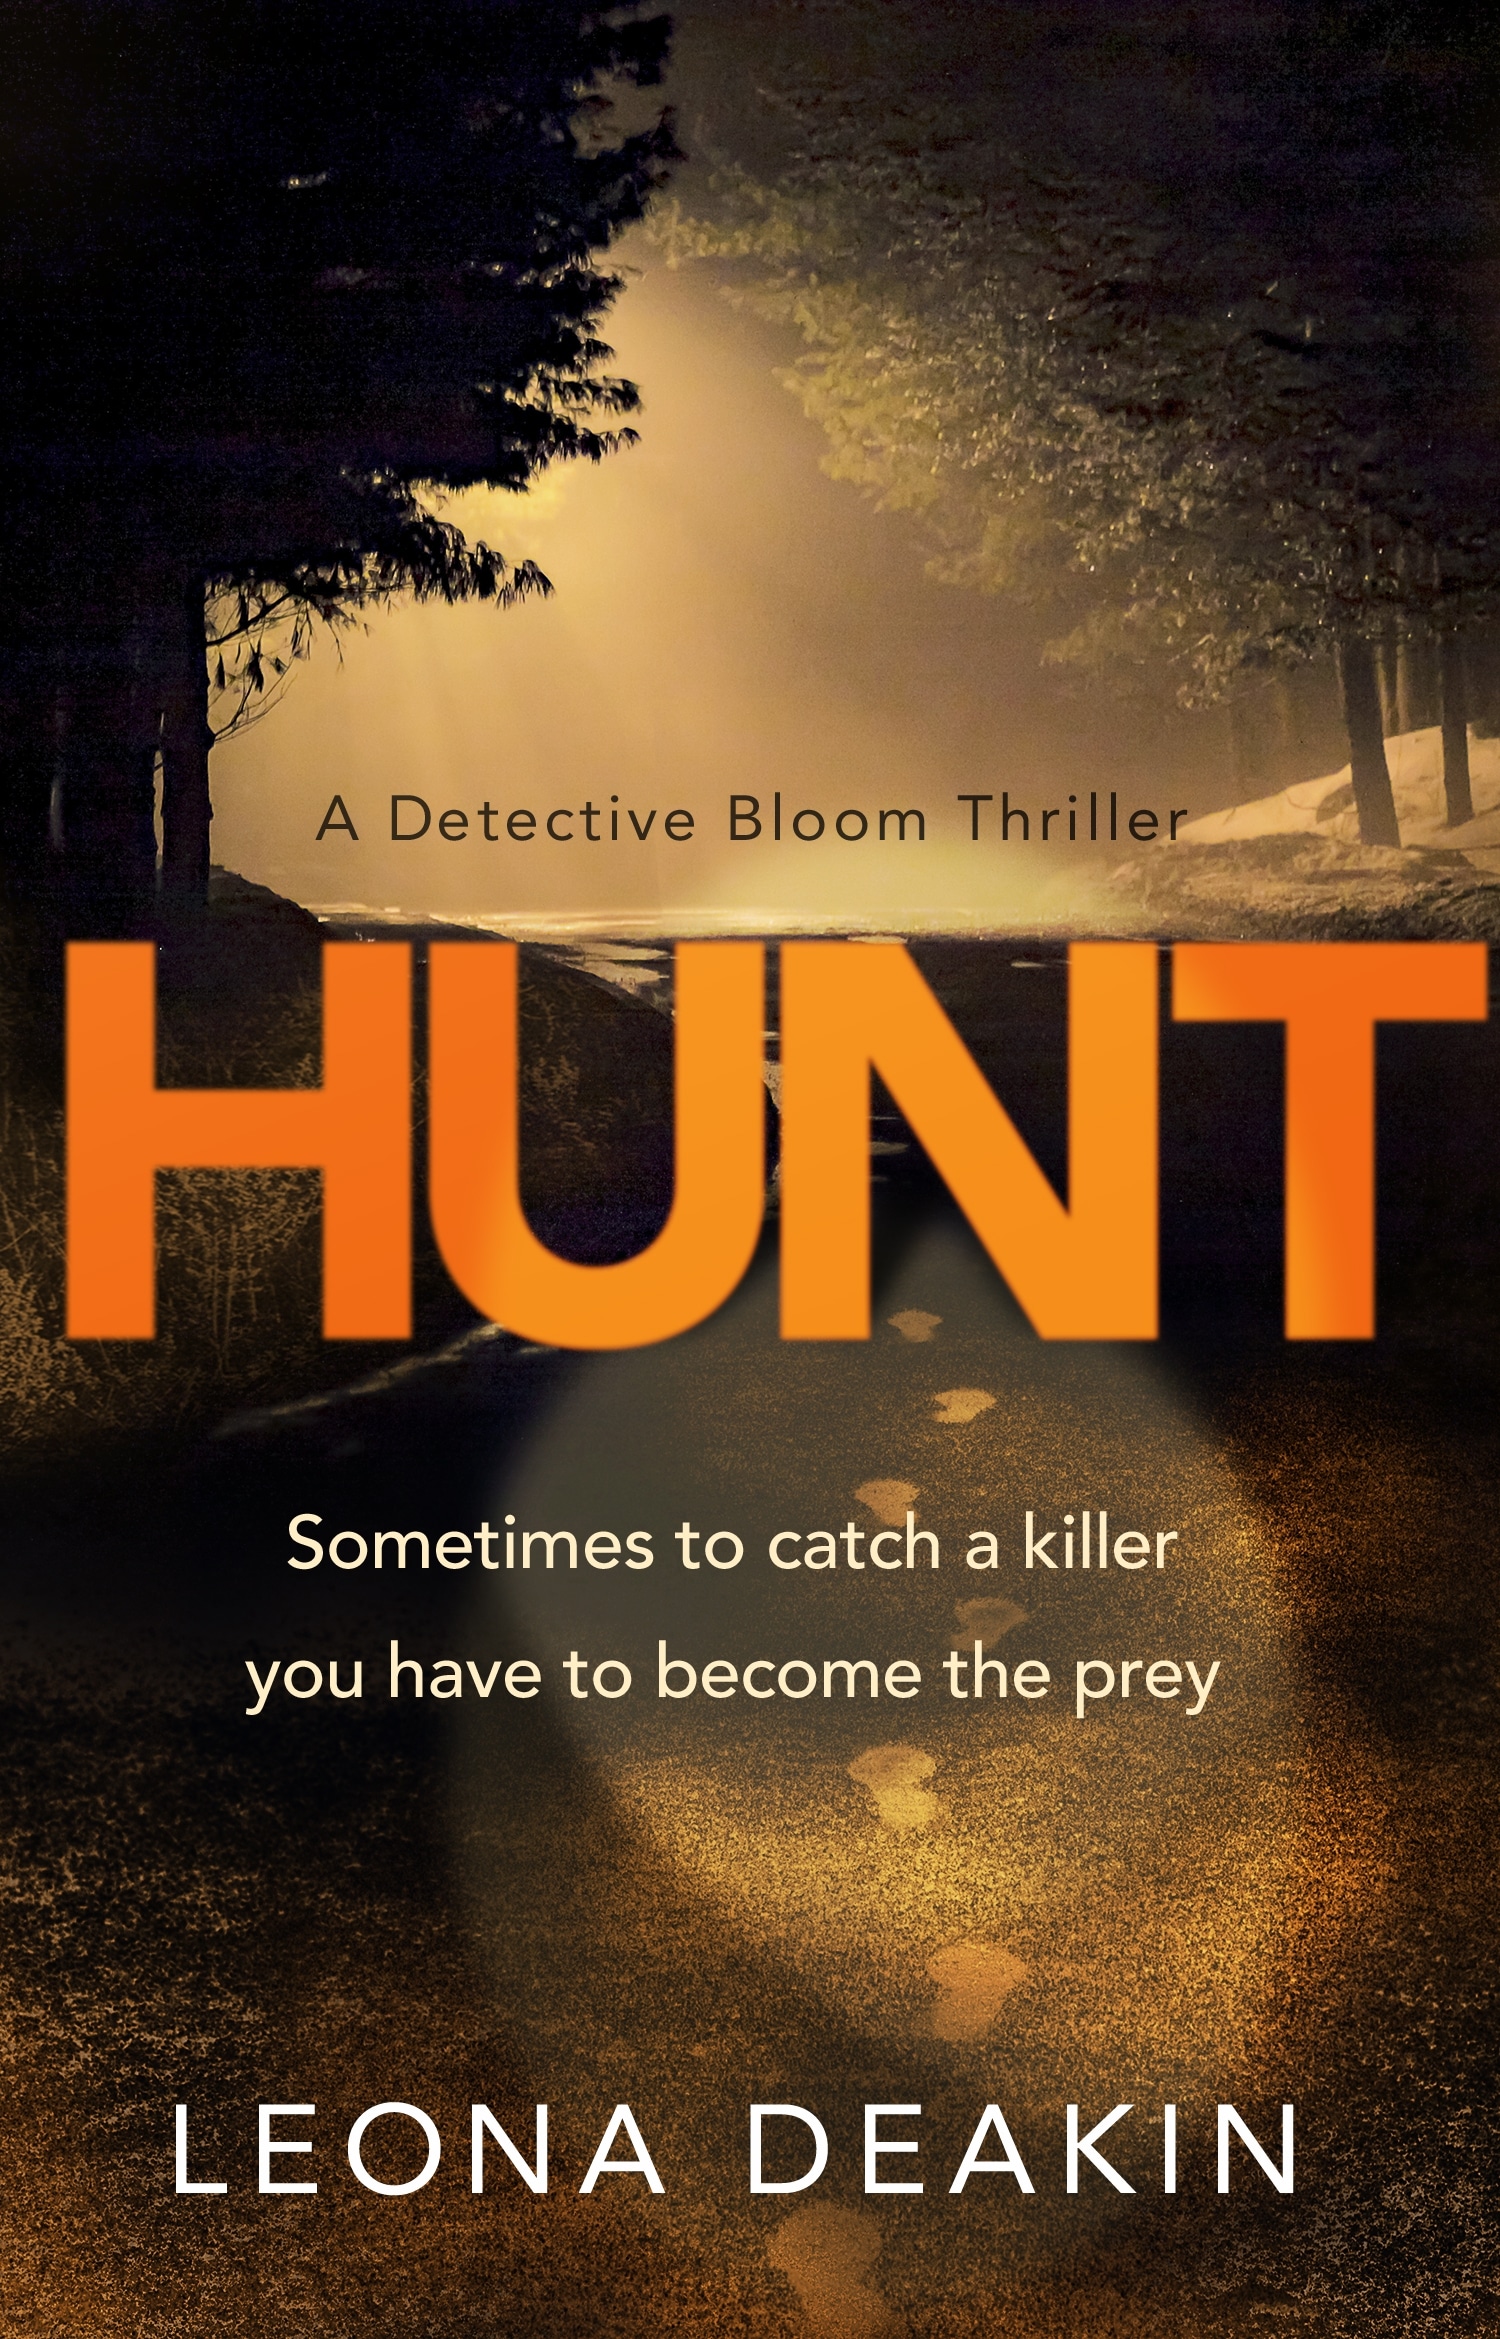 Book “Hunt” by Leona Deakin — September 16, 2021